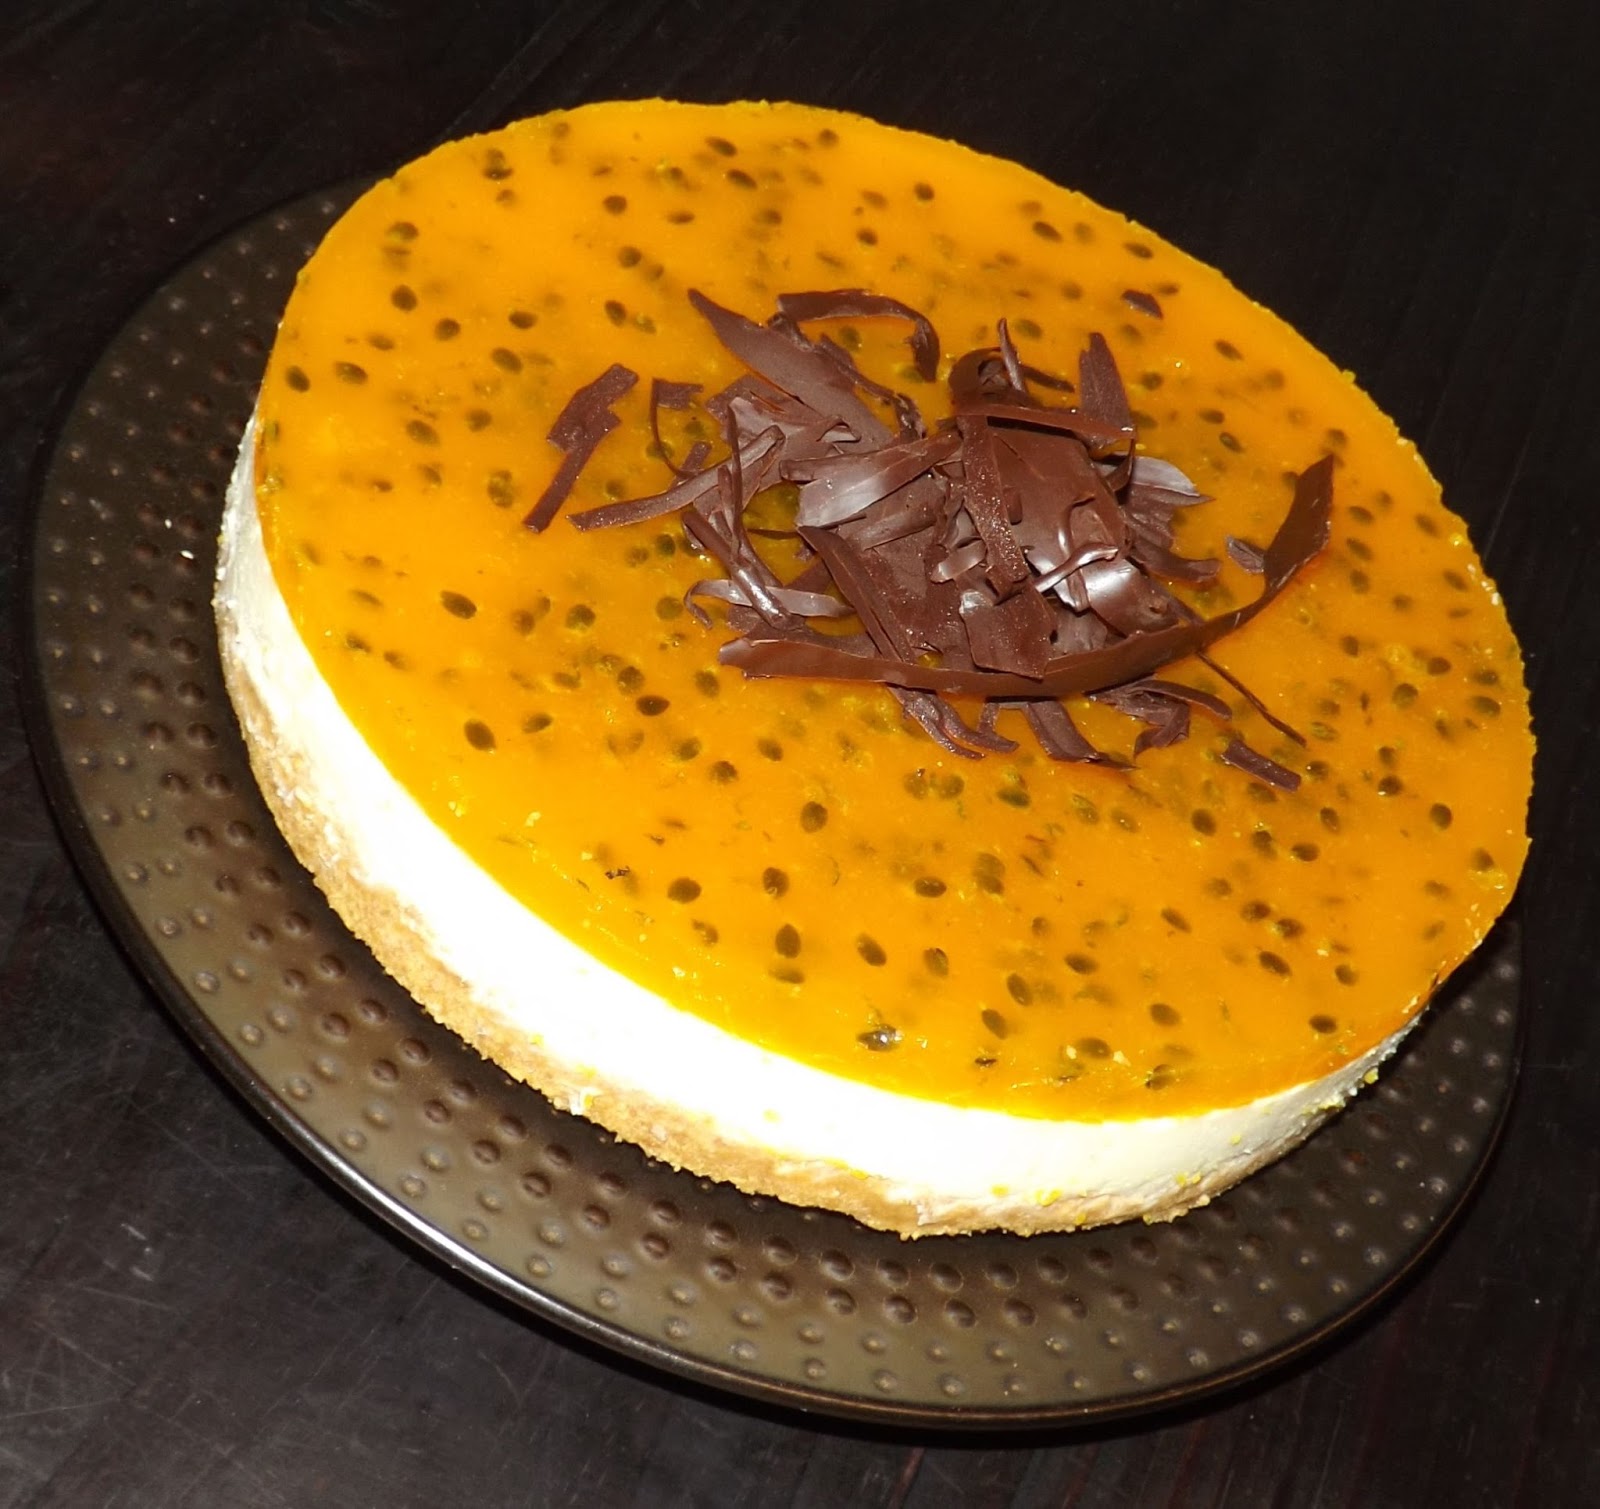 Desert cheesecake cu jeleu de fructul pasiunii (maracuya)